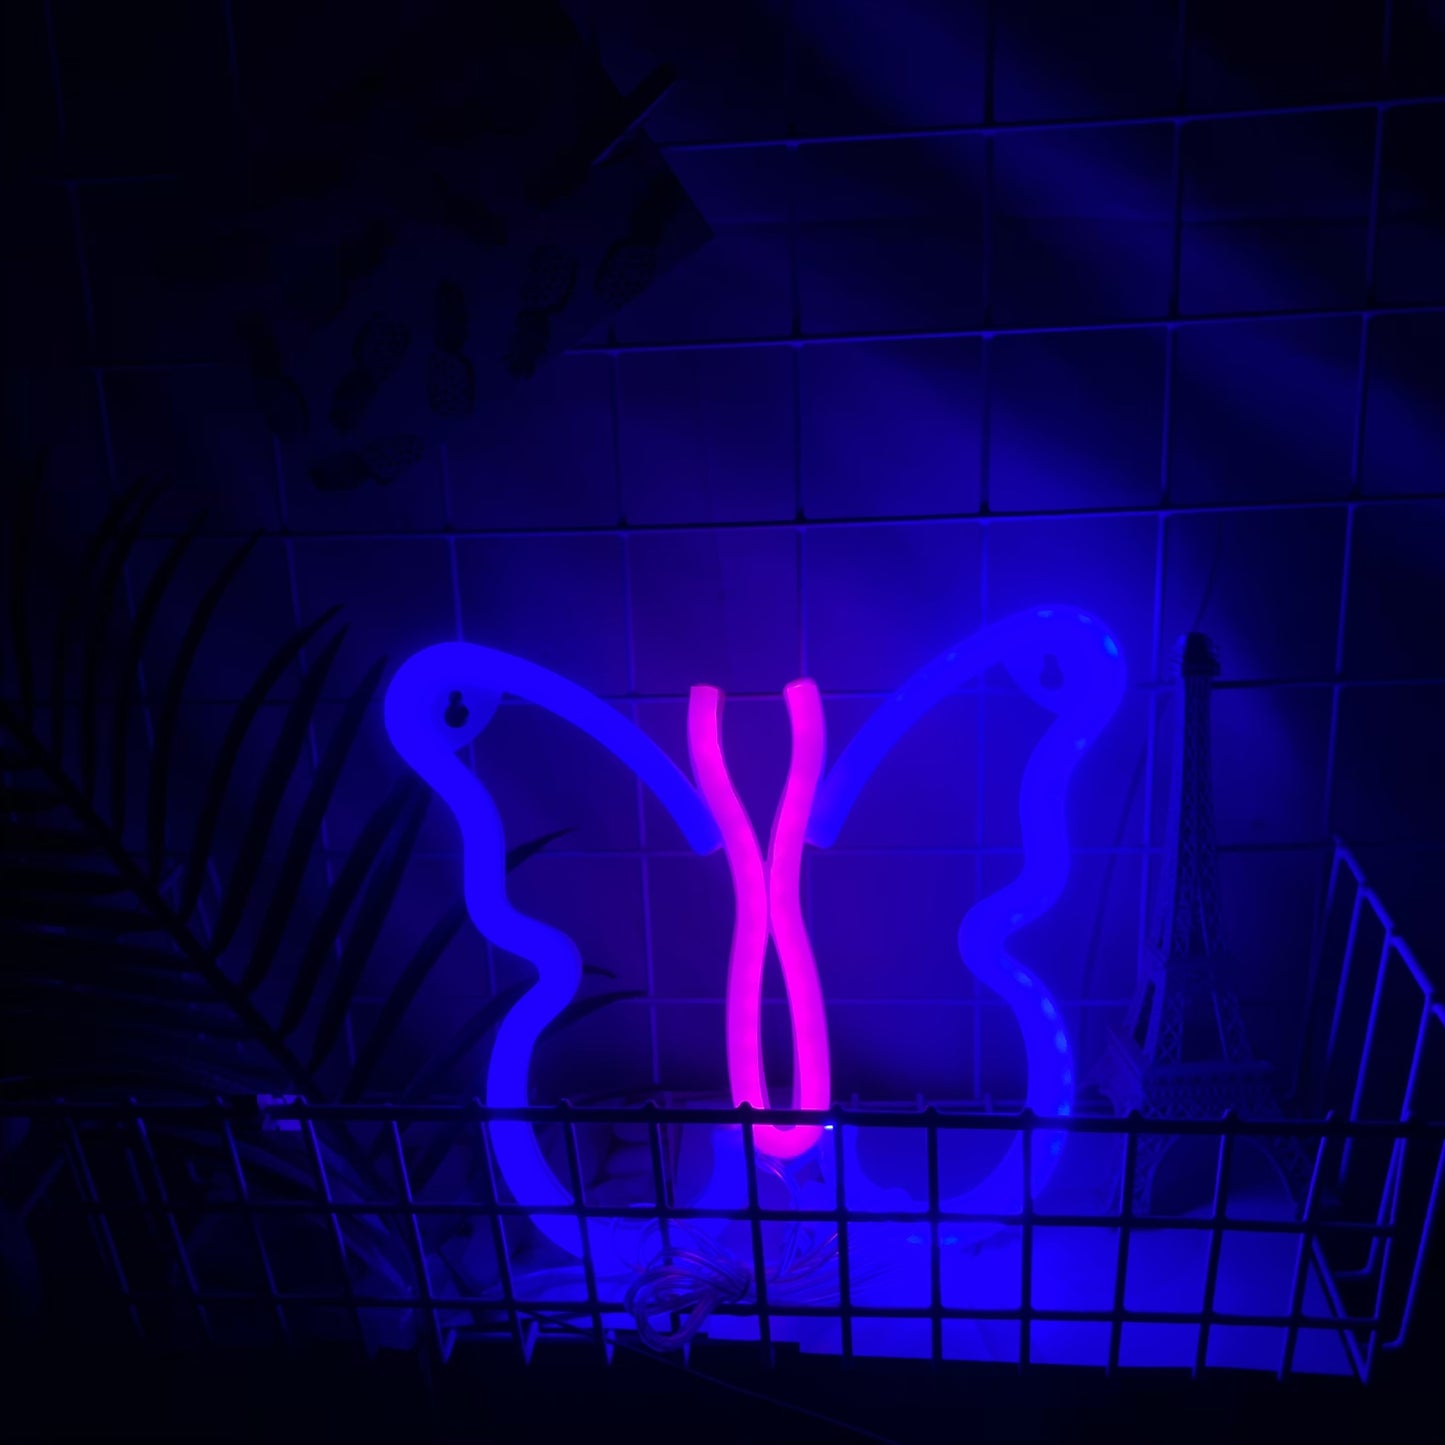 Butterfly Neon Light Sign